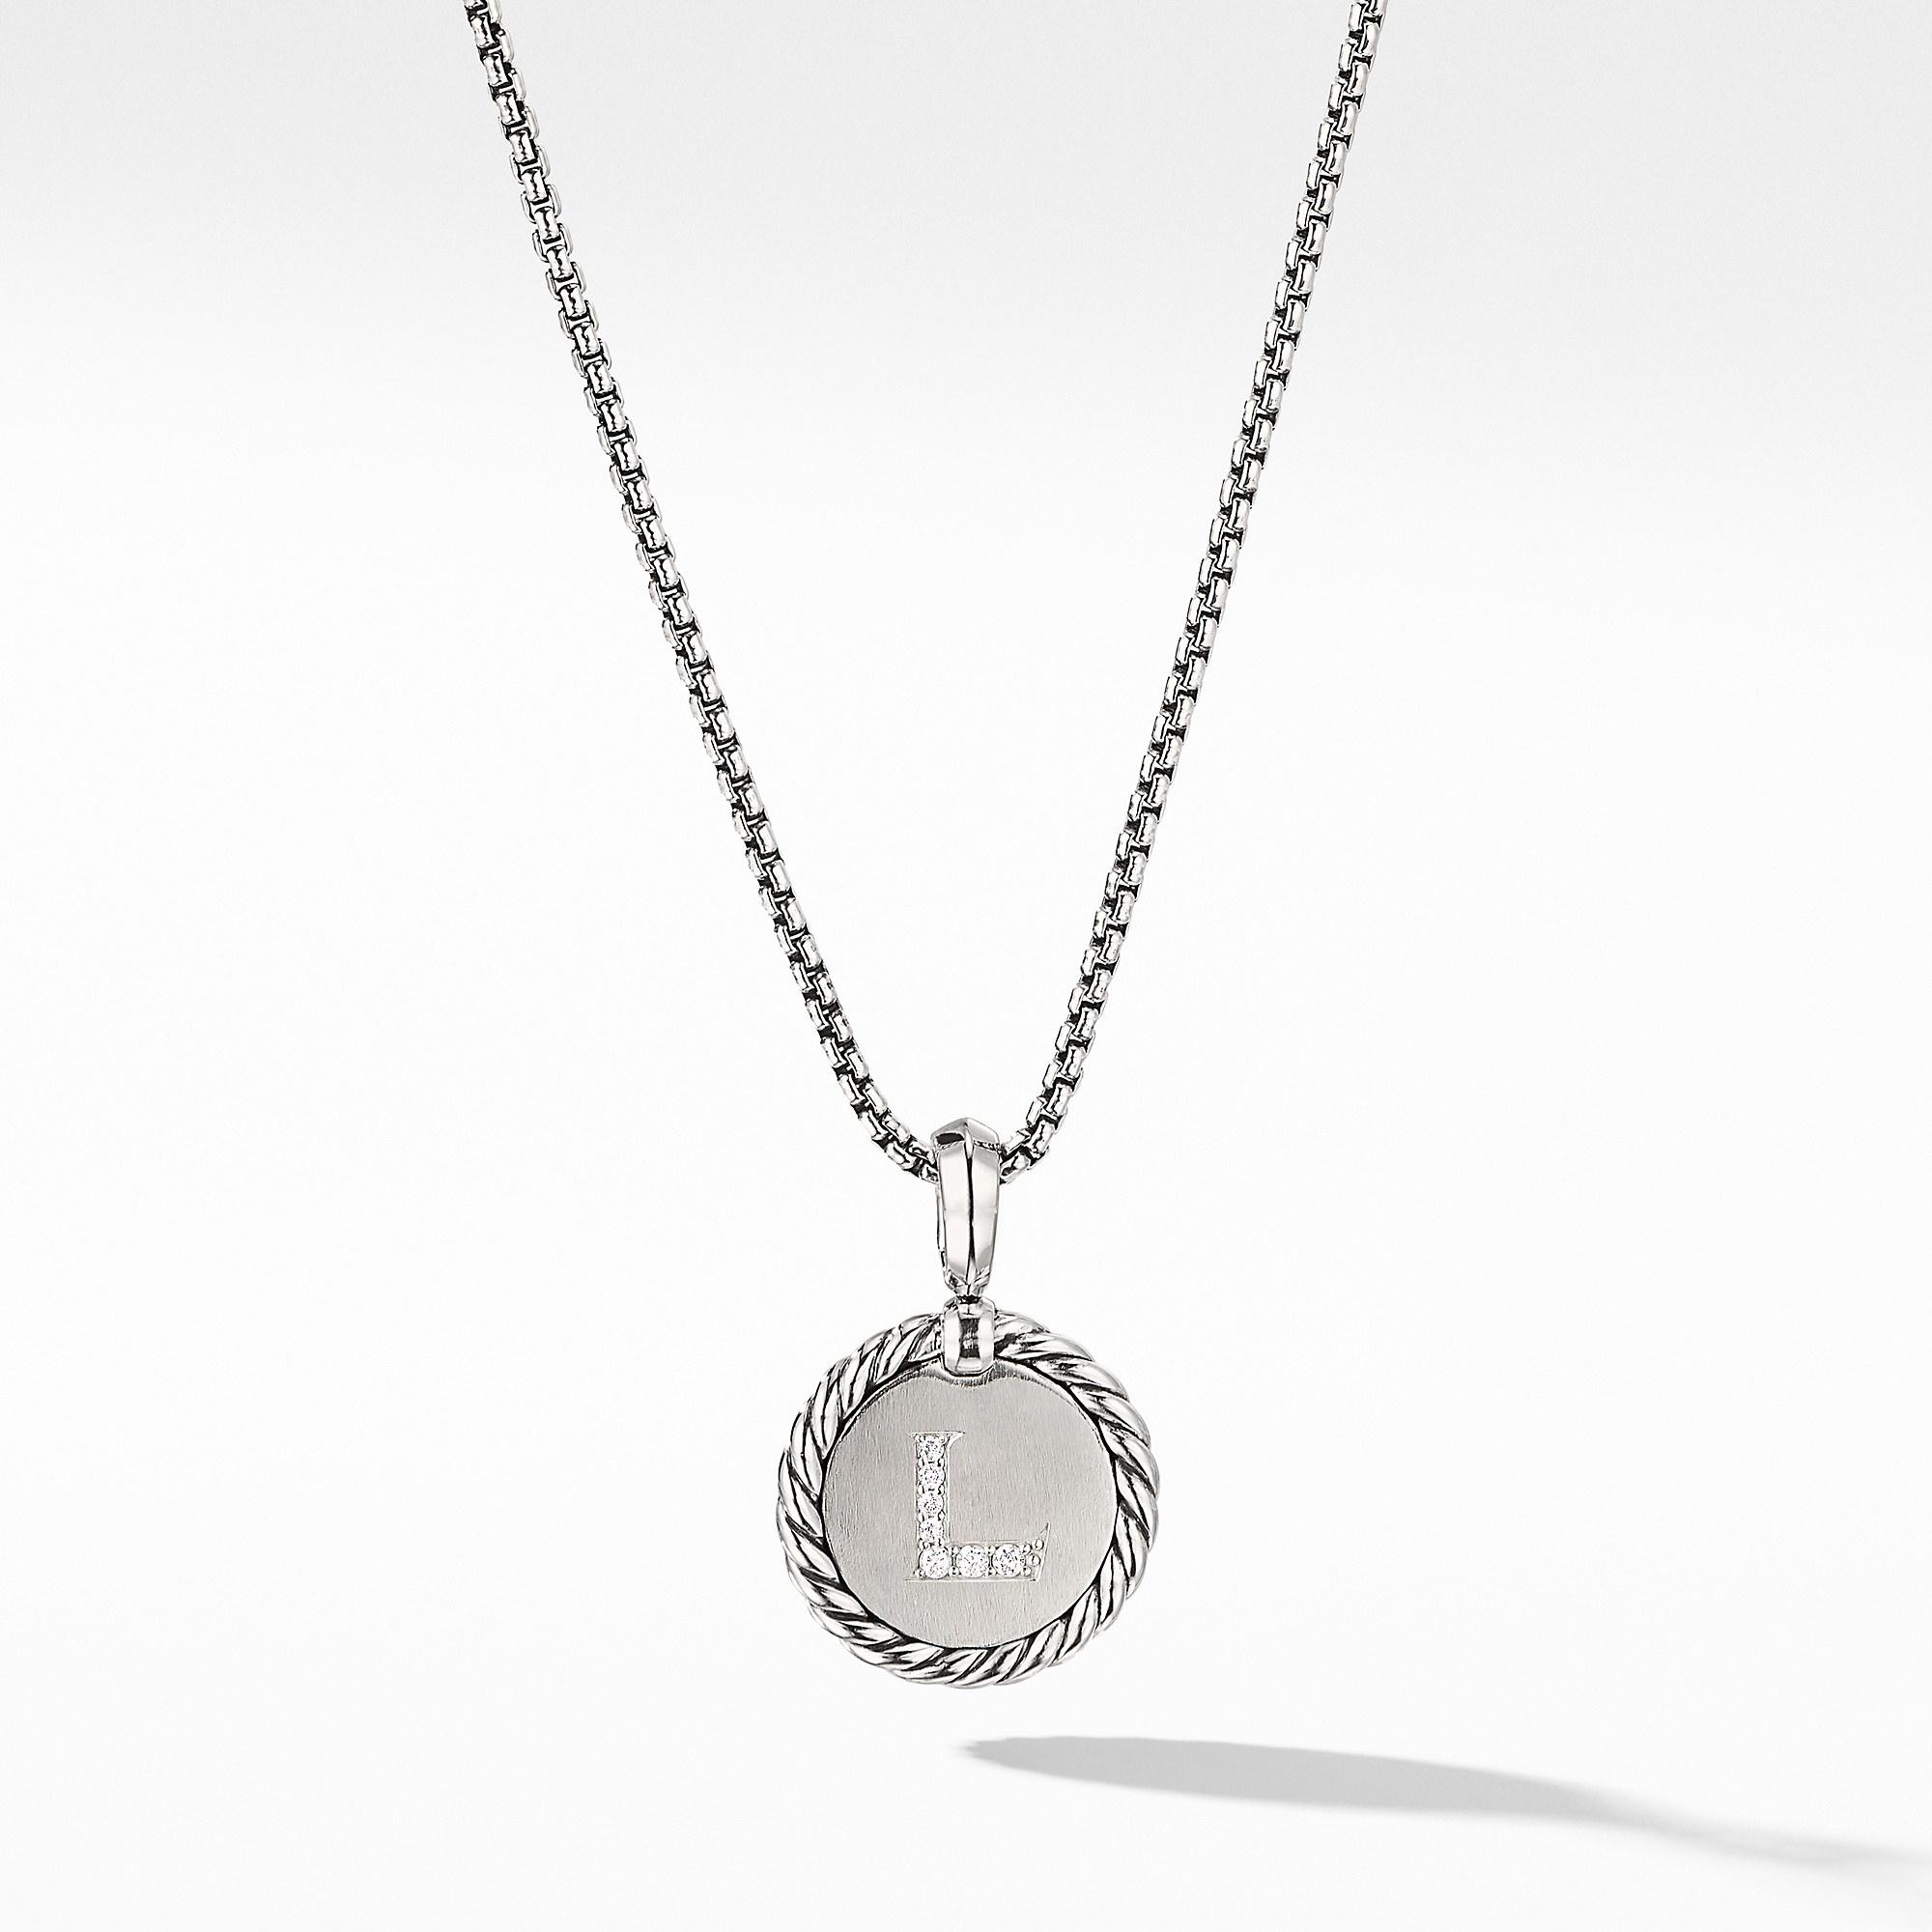 David Yurman L initial Charm Necklace with Diamonds